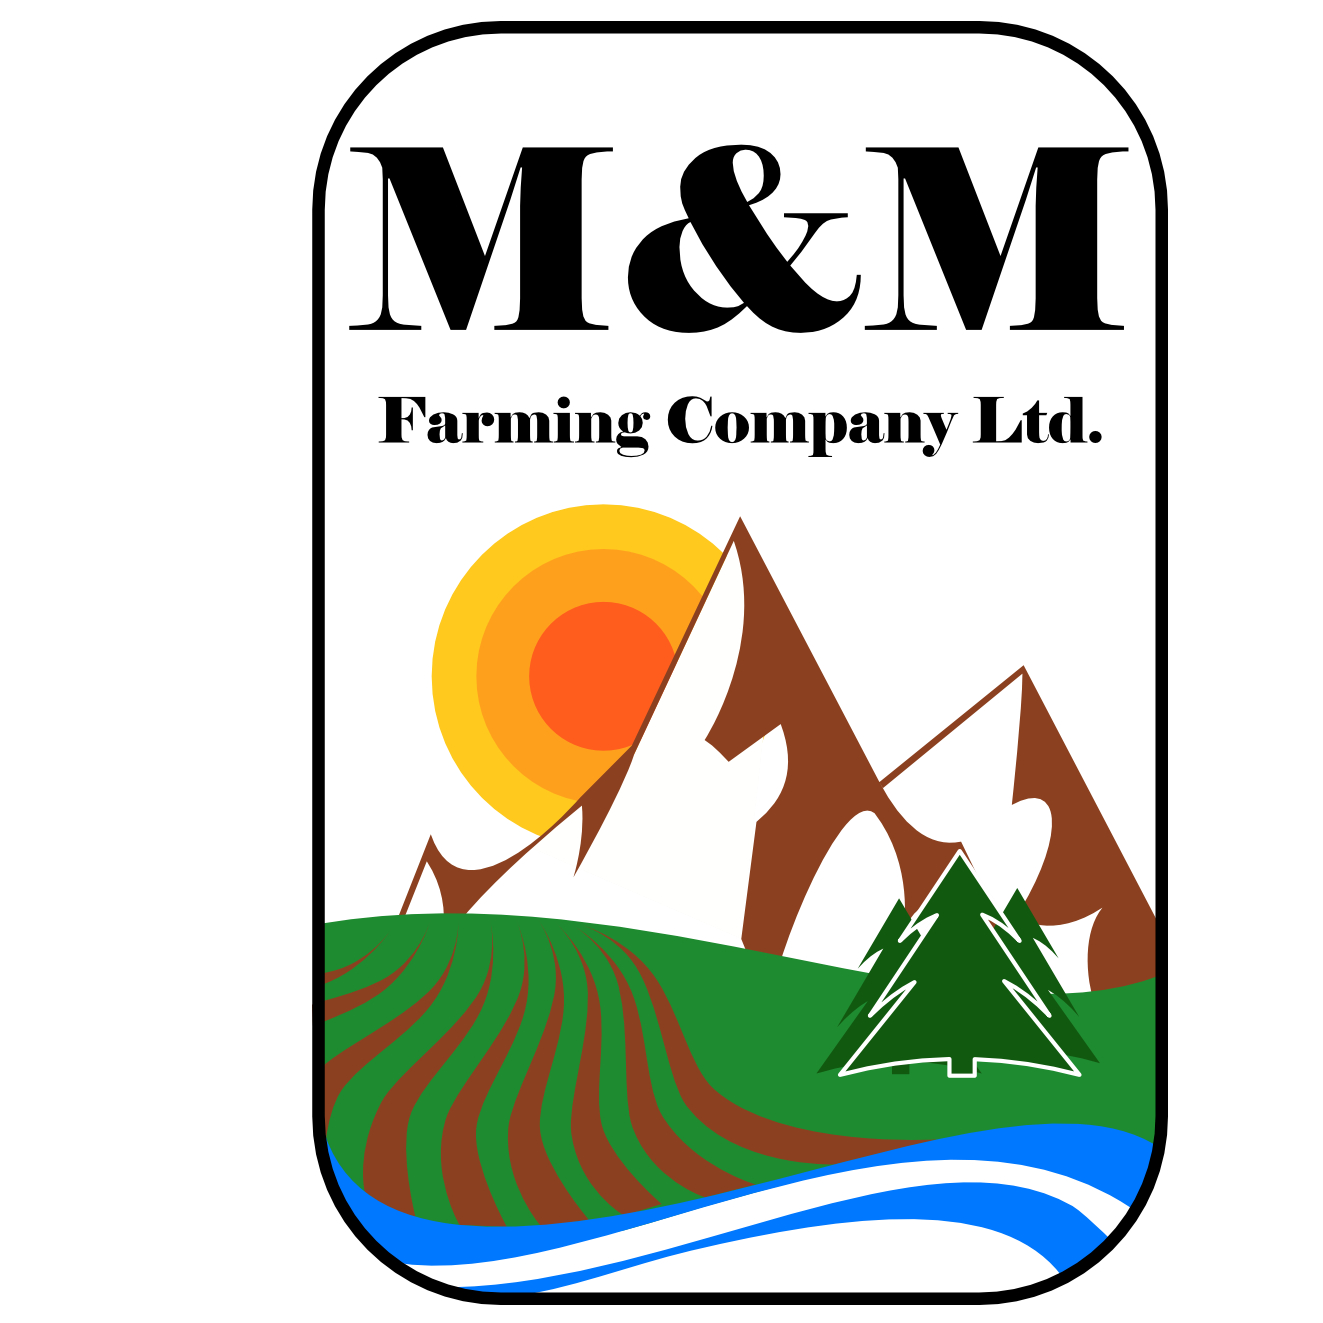 M&M Farming Company Ltd.